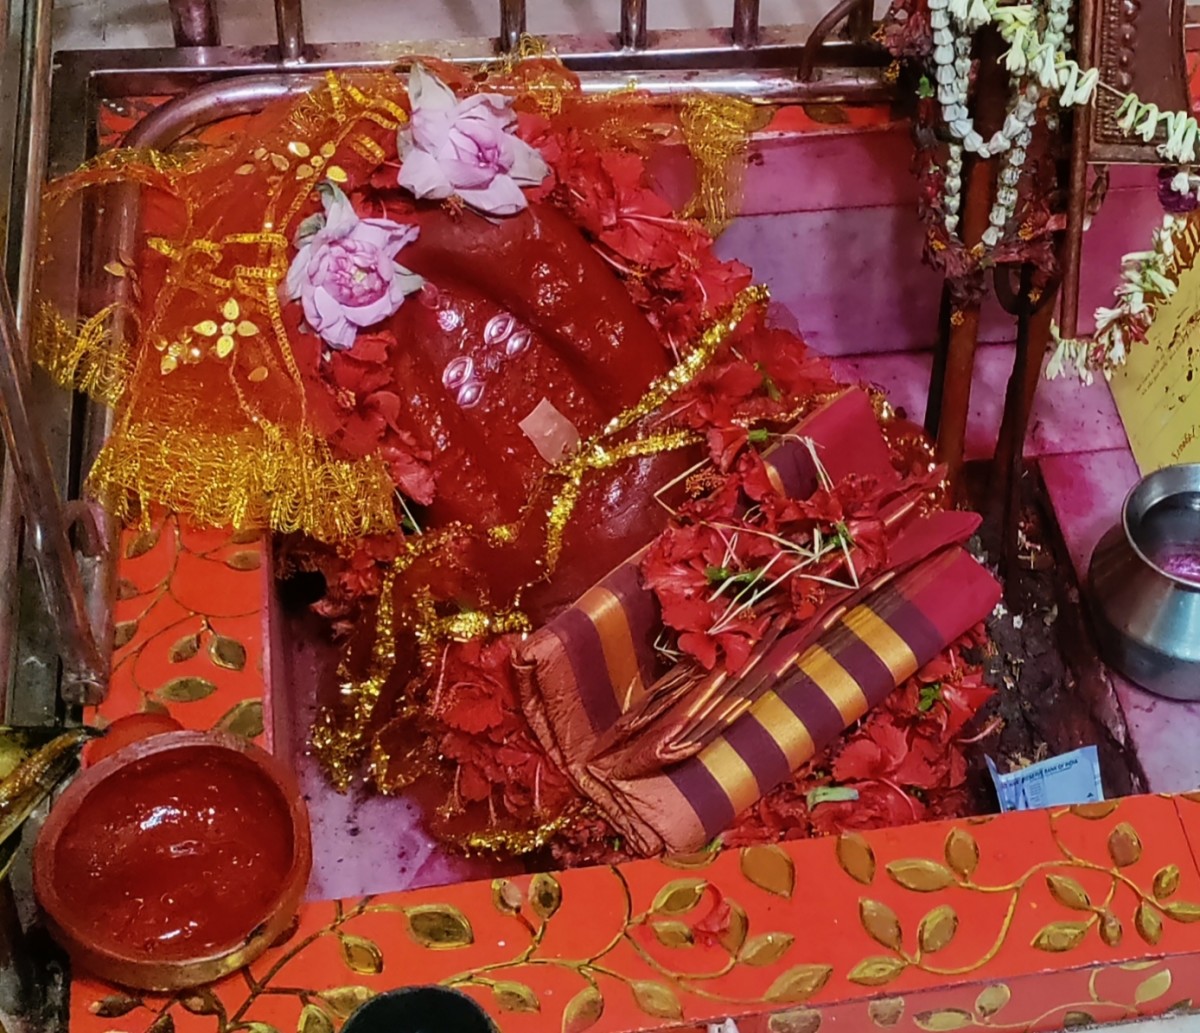 Maida Patalbhedini Dakshina Kali temple - a Kali temple with connection to The Ramayana